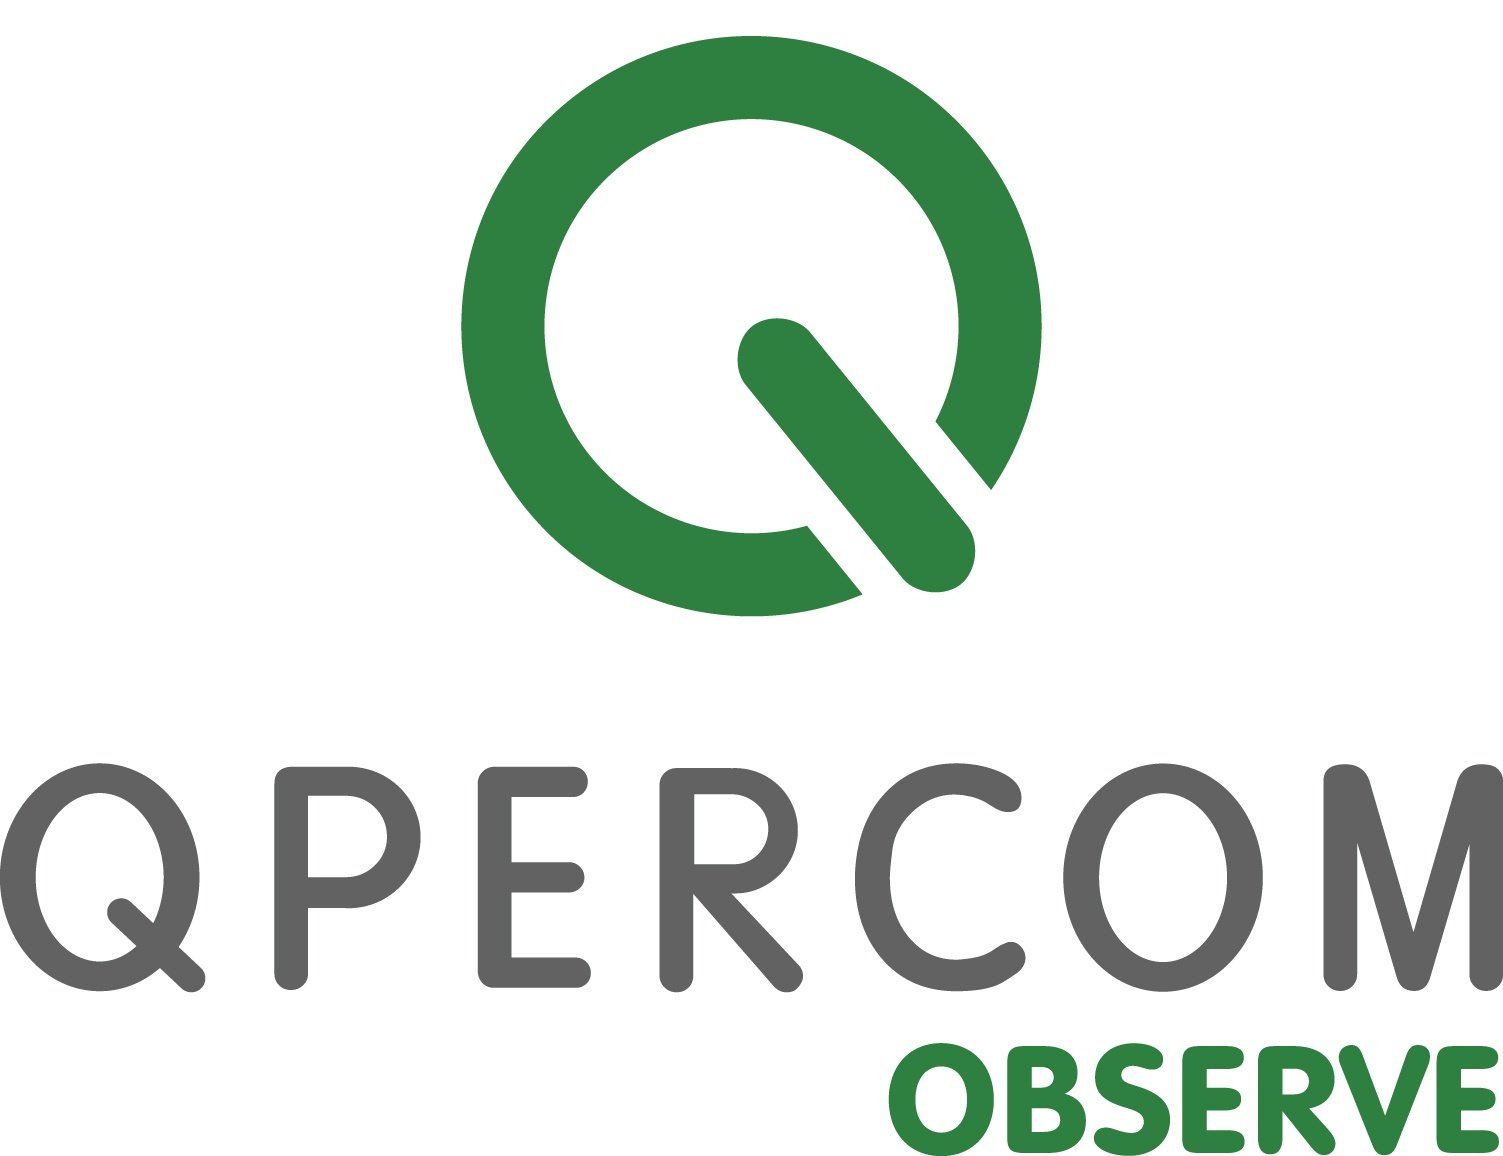 Qpercom Observe